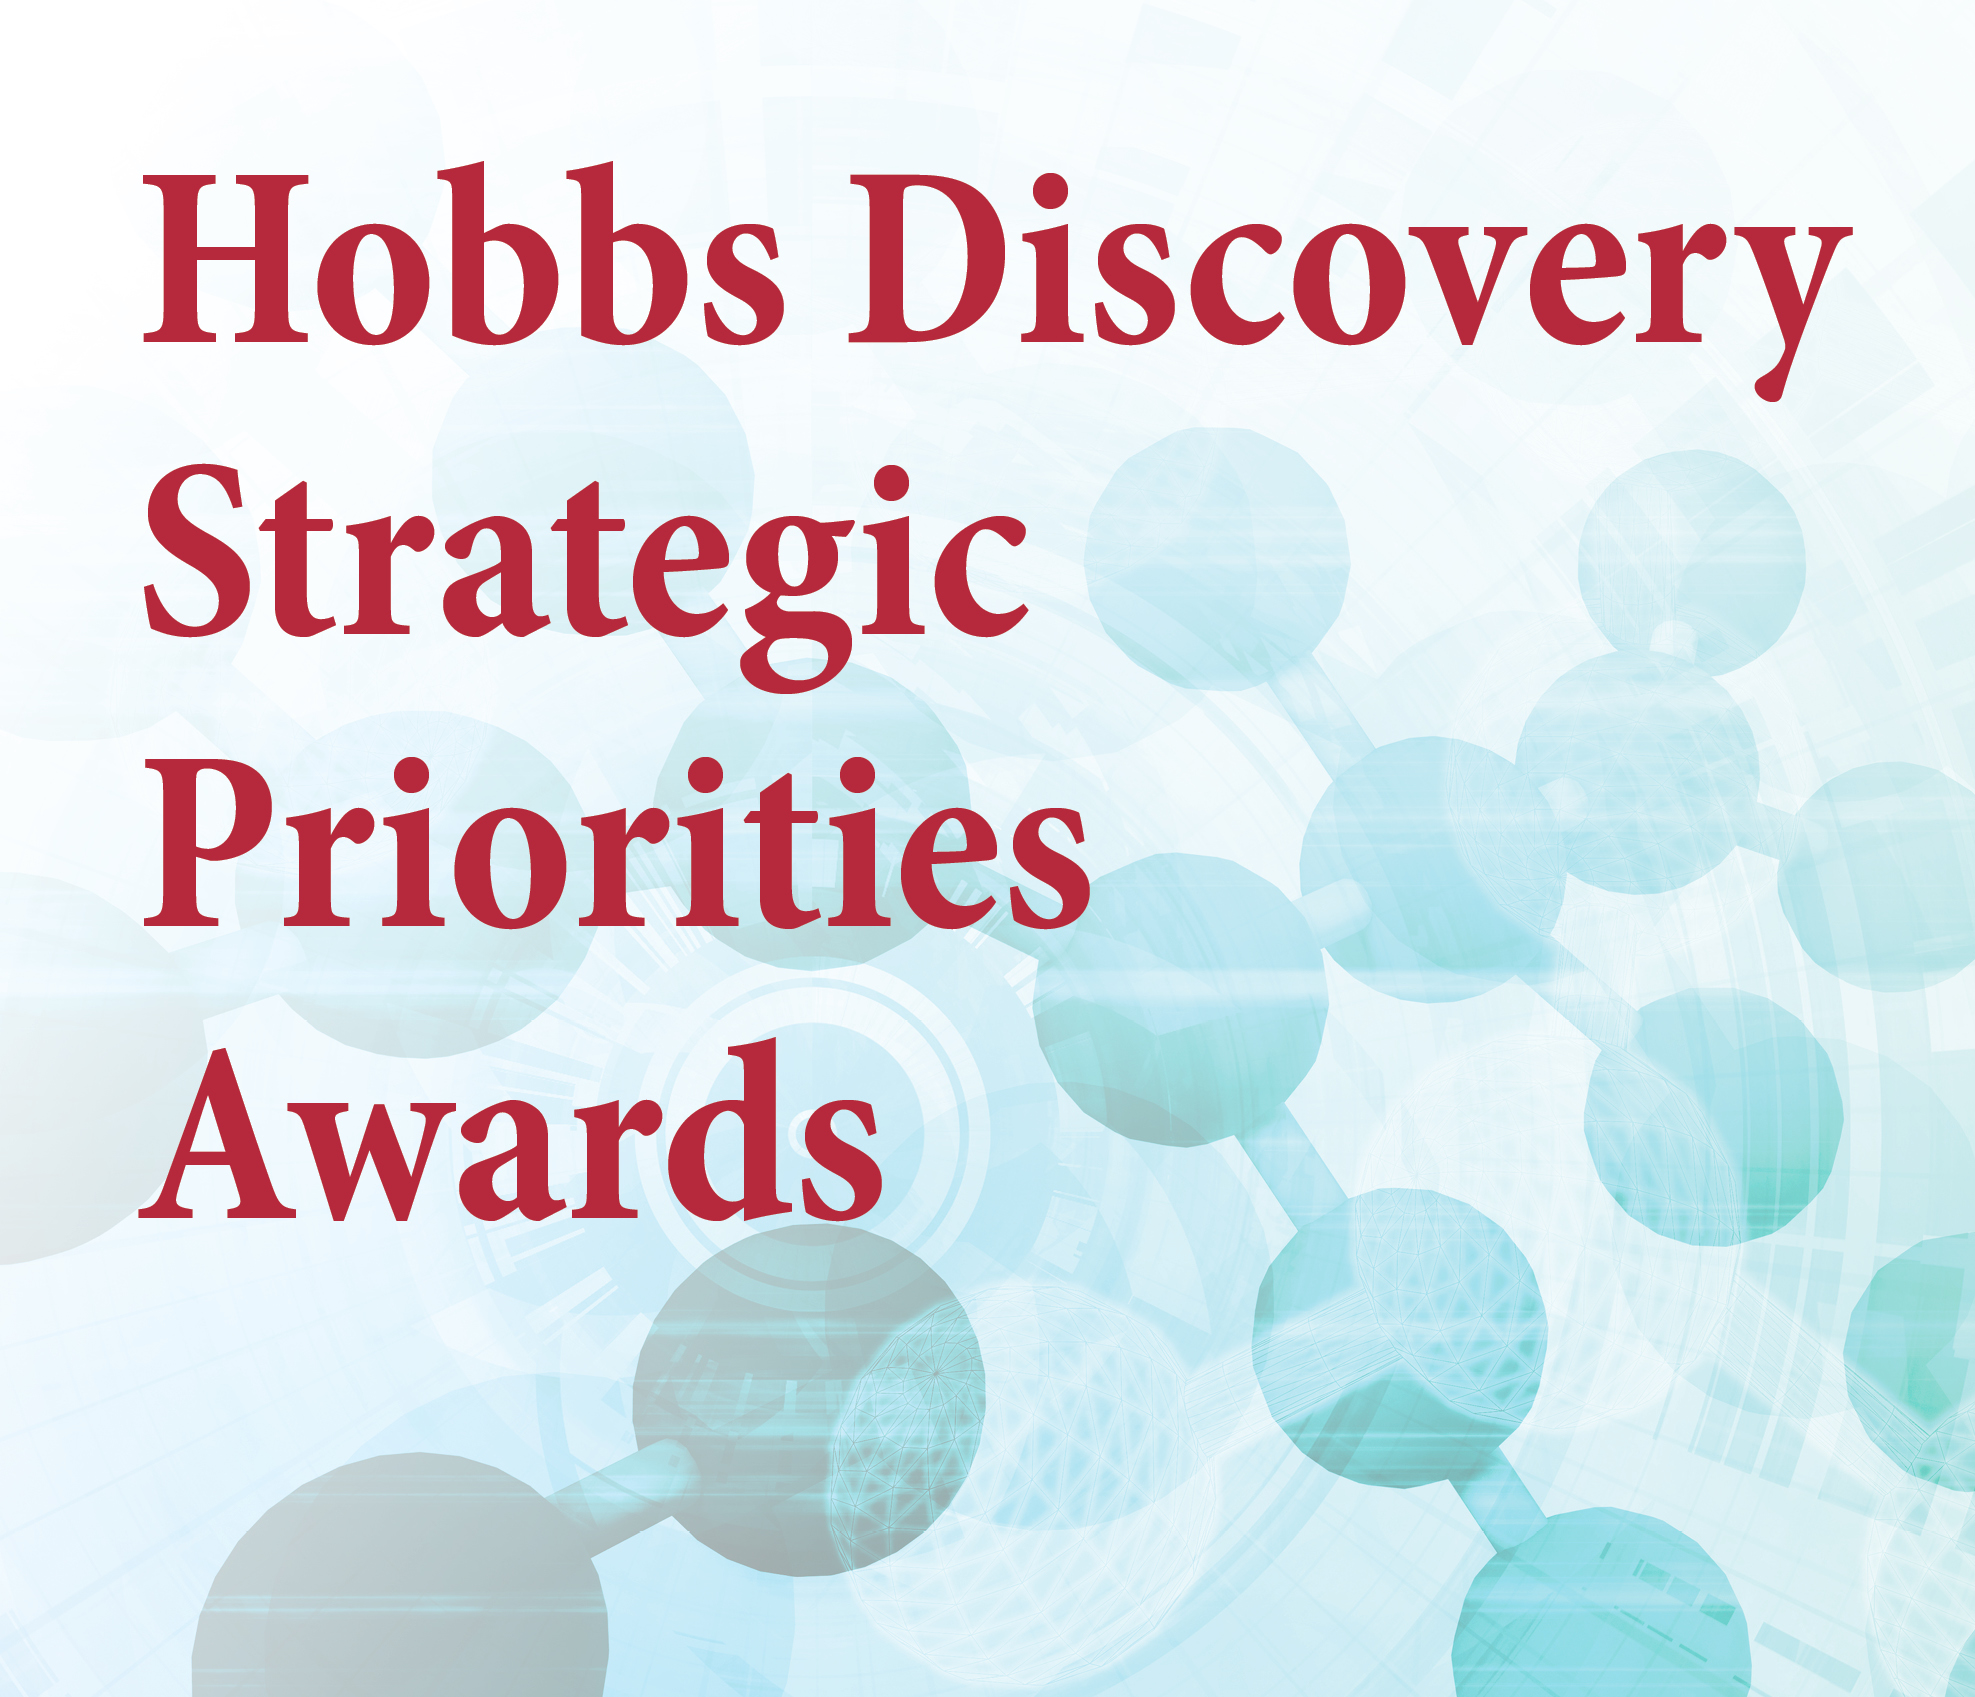 Hobbs Discovery Strategic Priorities Awards